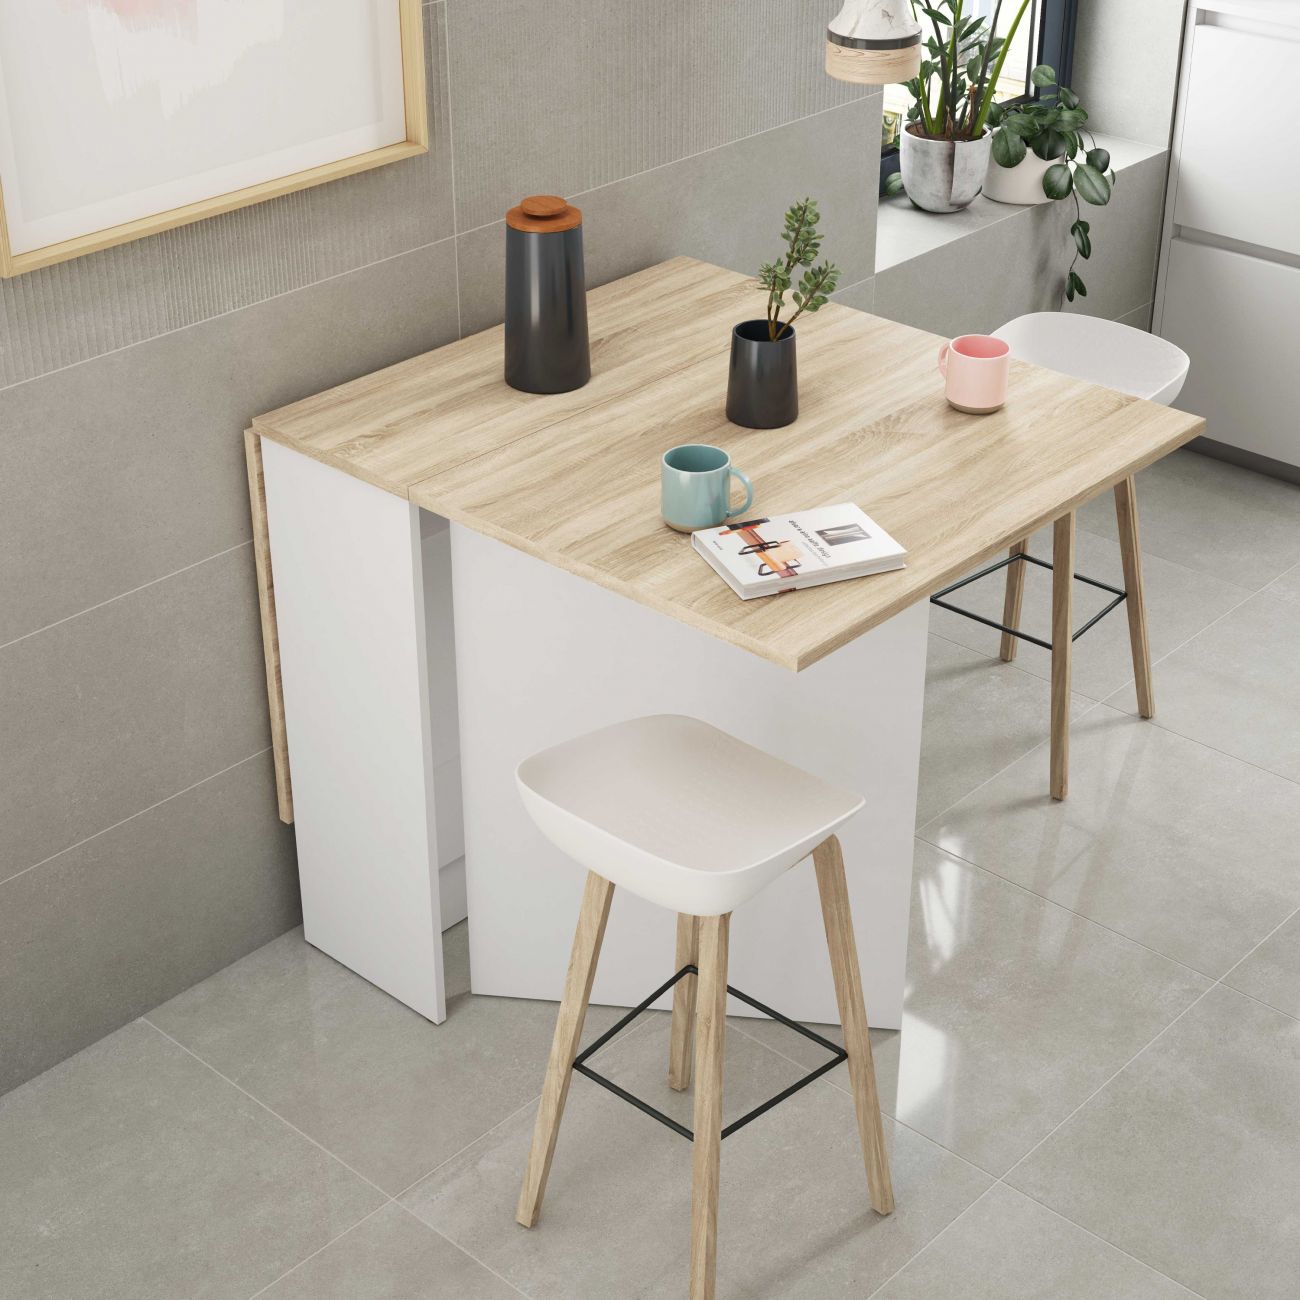 Mesa cocina pequeña extensible Maxima estilo nordico con patas de